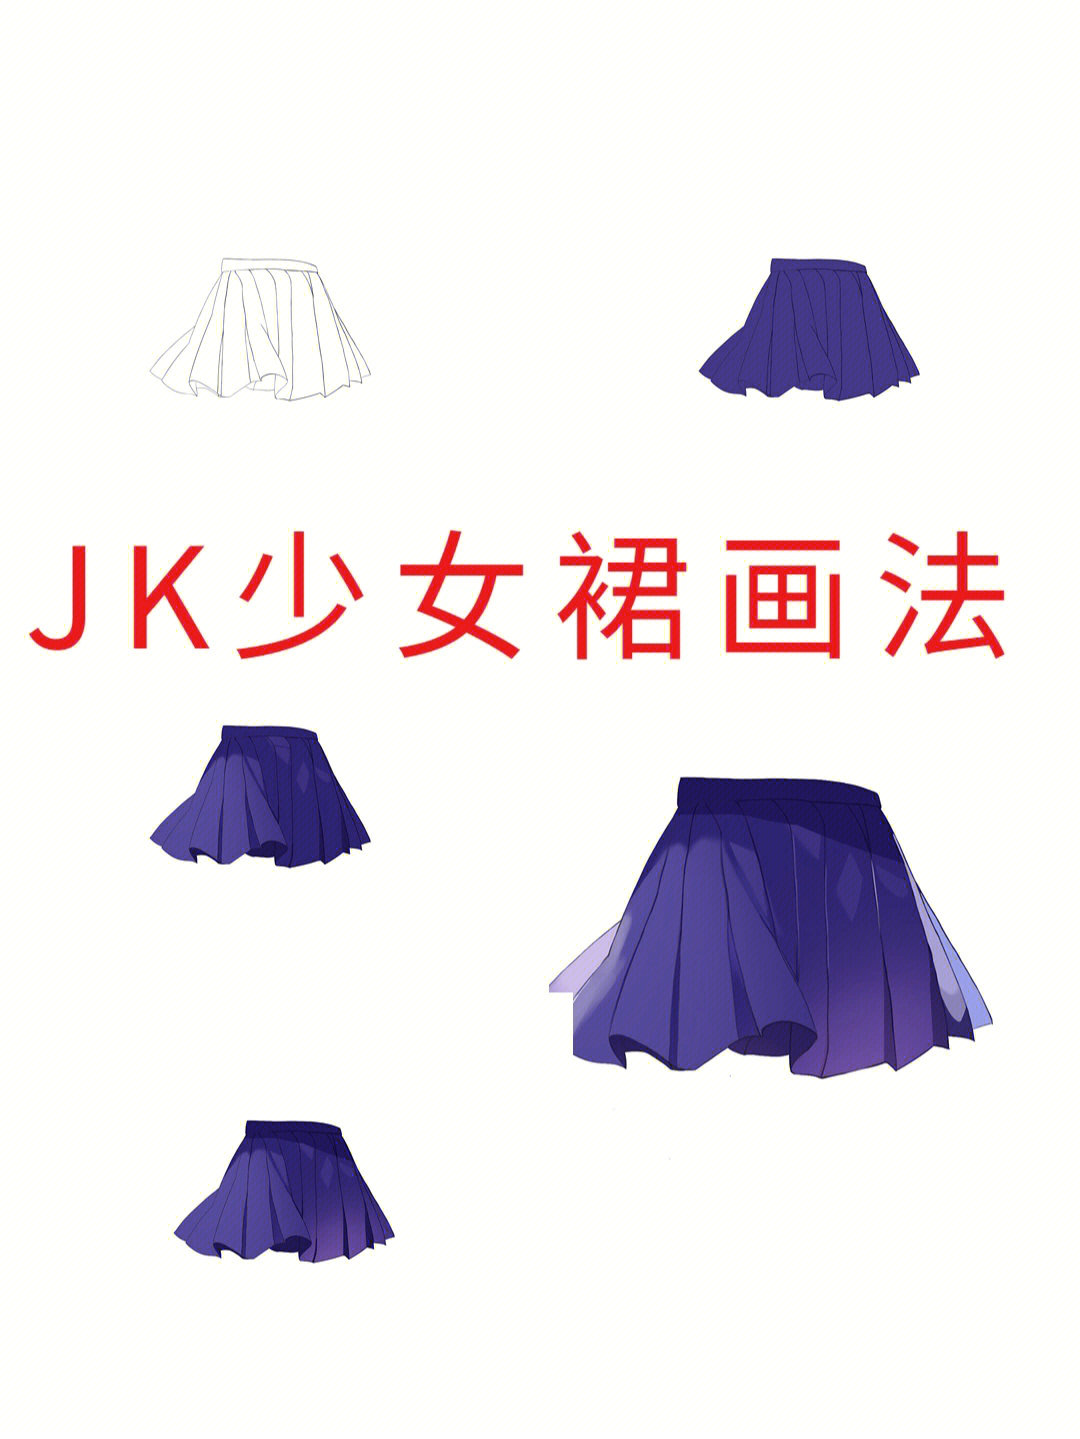 jk的裙子 绘画图片